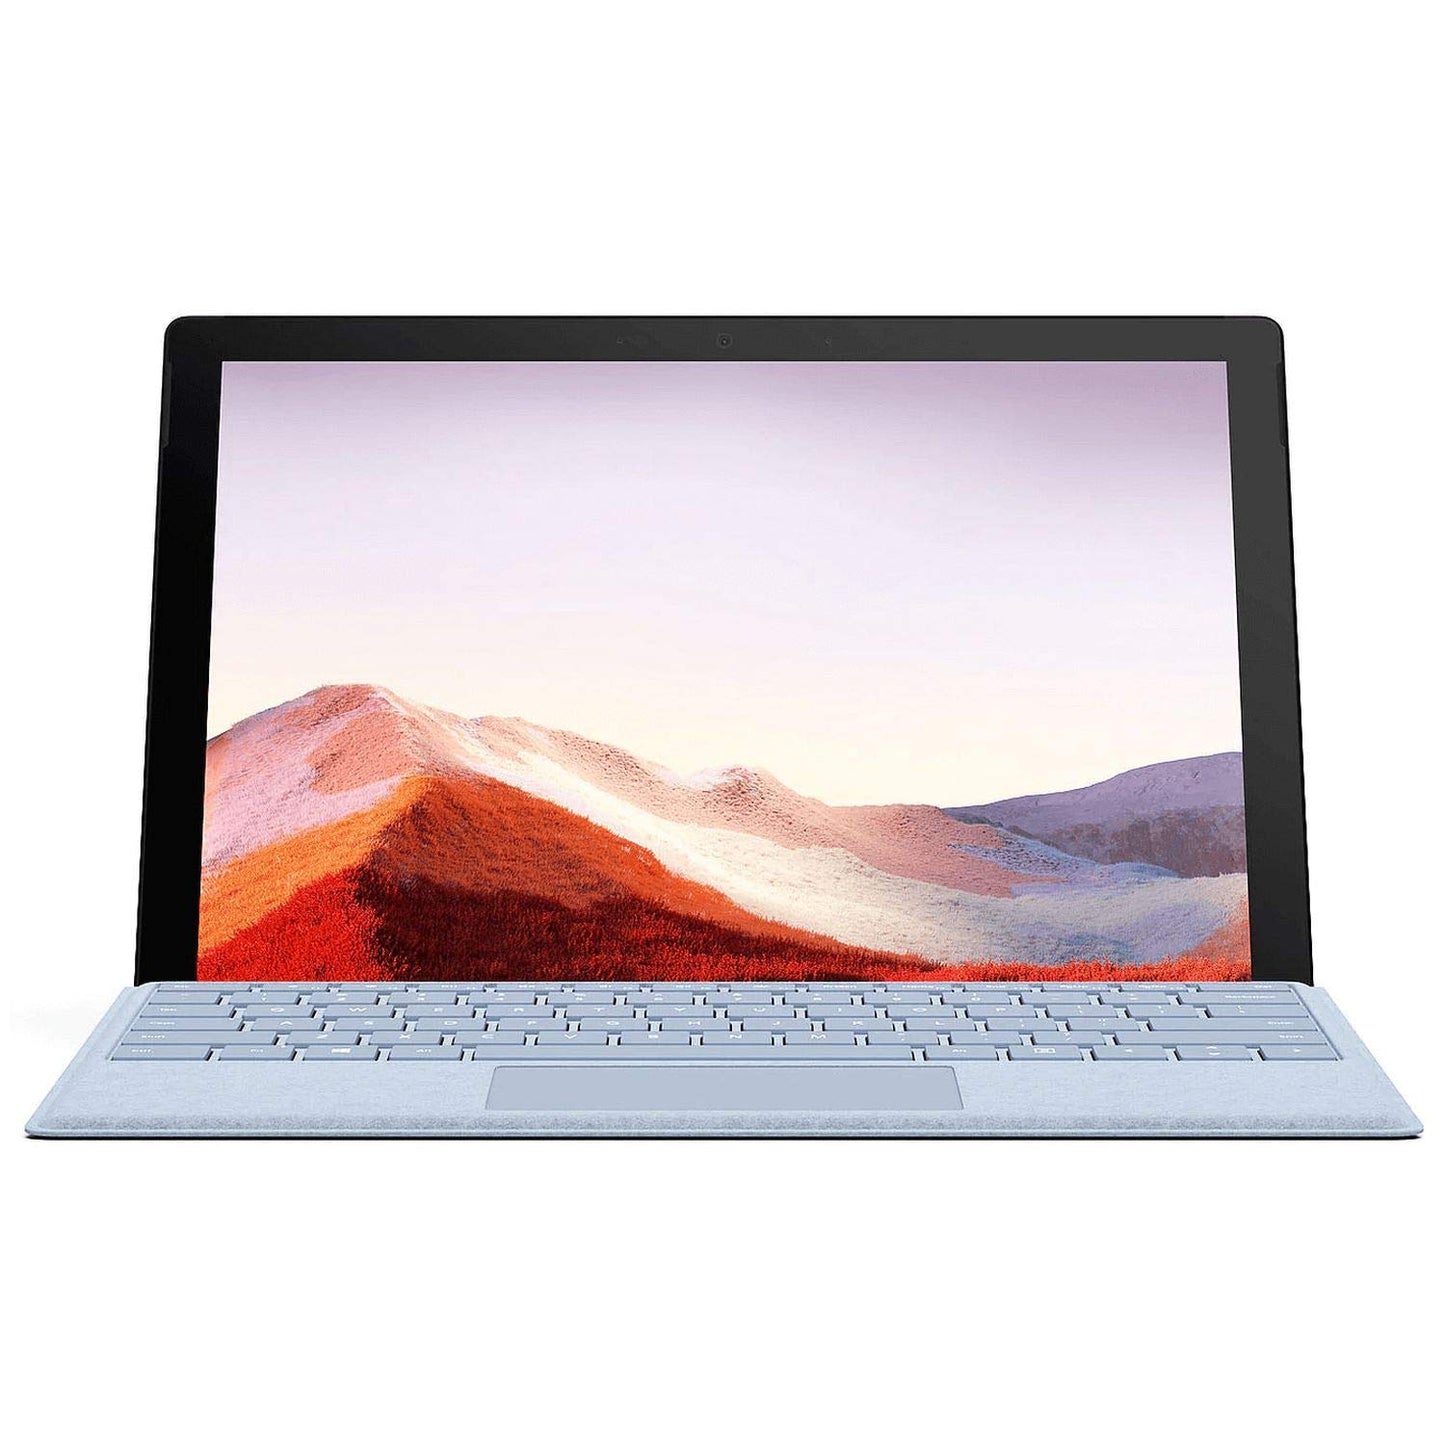 Microsoft Surface Pro 7 + 11th Gen Intel Core i5 Processor 256GB,8GB RAM (Platinum)